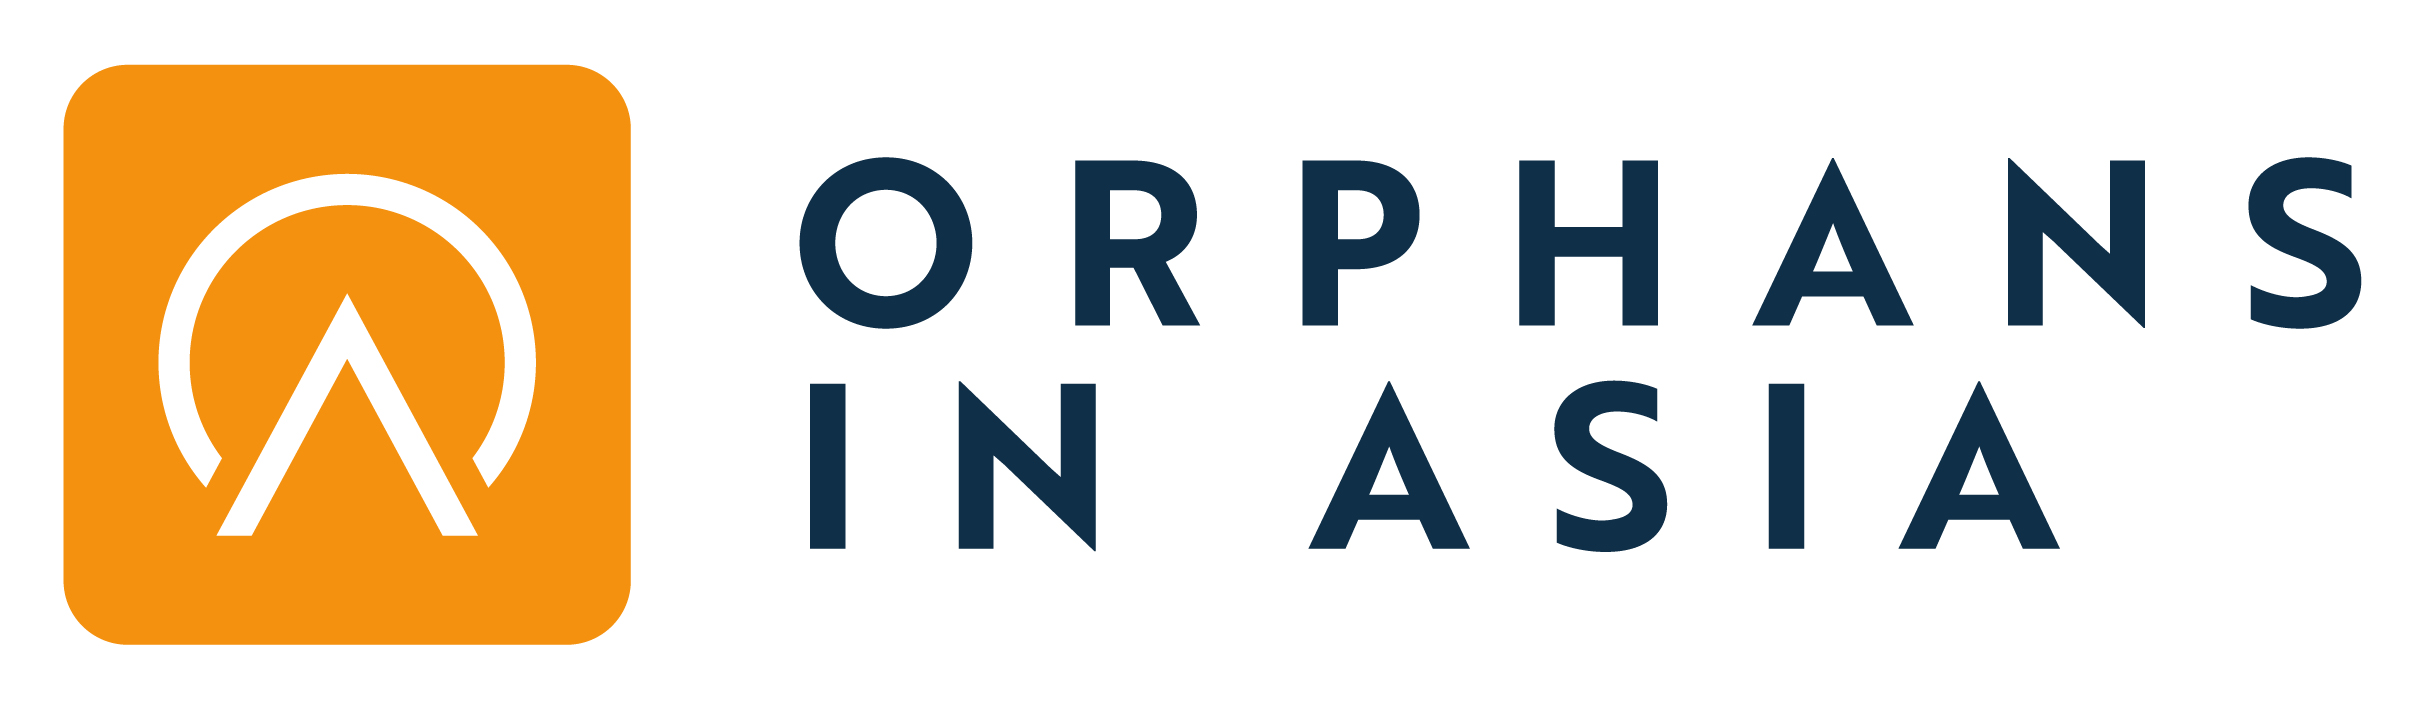 Orphans In Asia logo